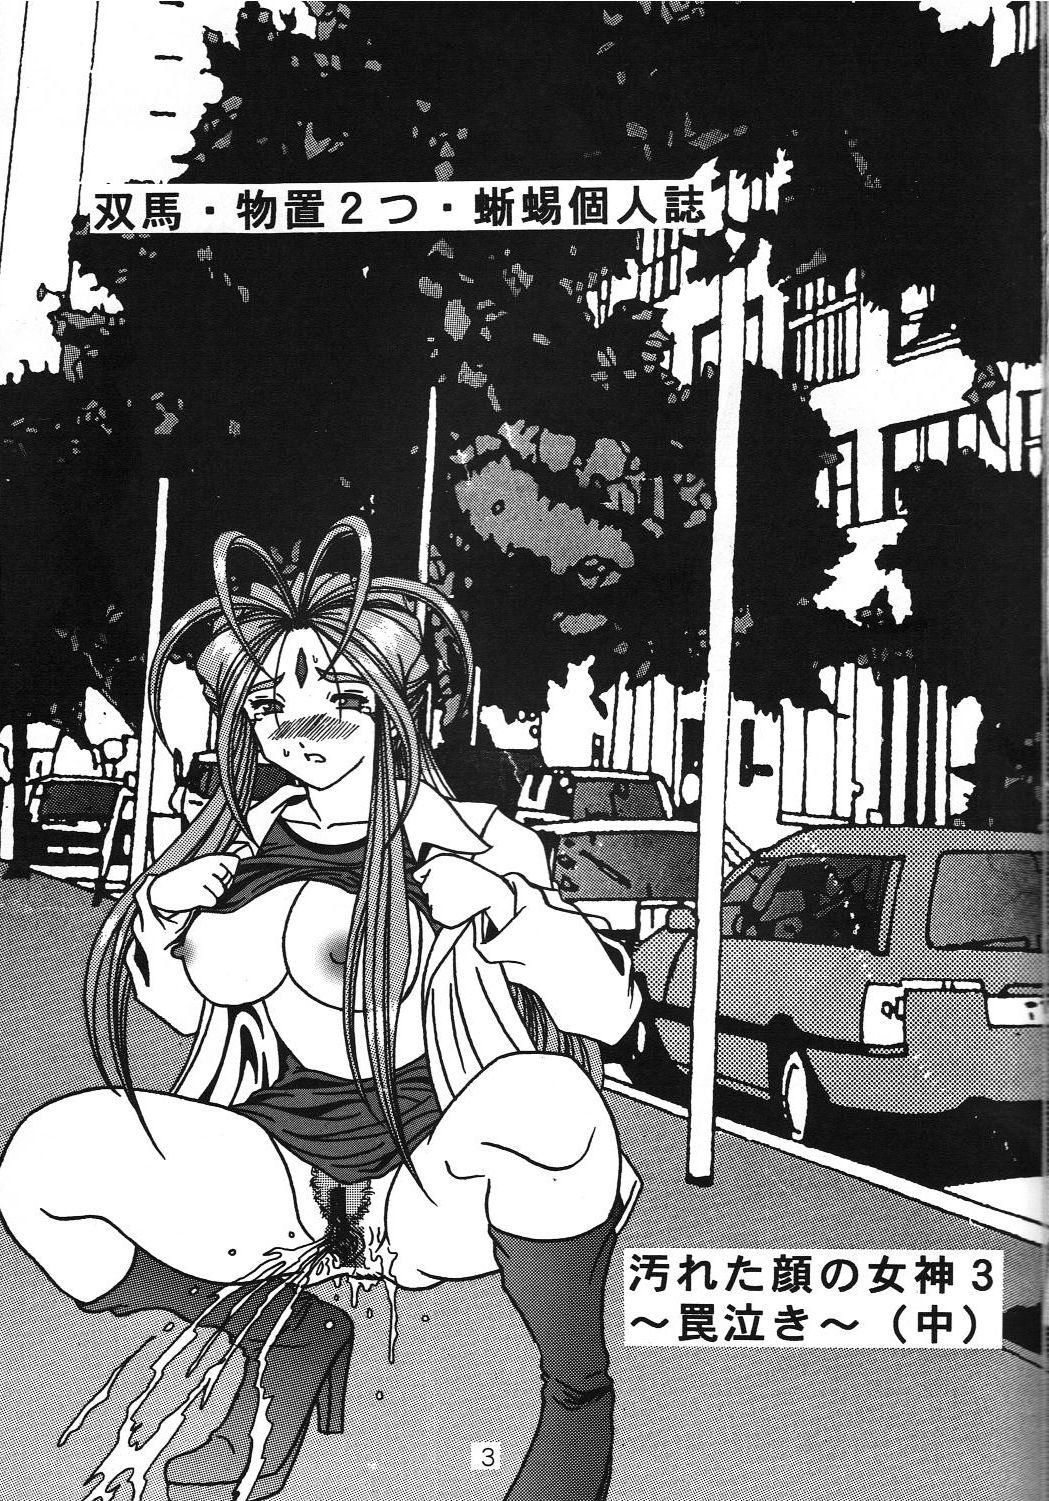 Kinky Yogoreta Kao no Megami 3 - Ah my goddess Pale - Page 2